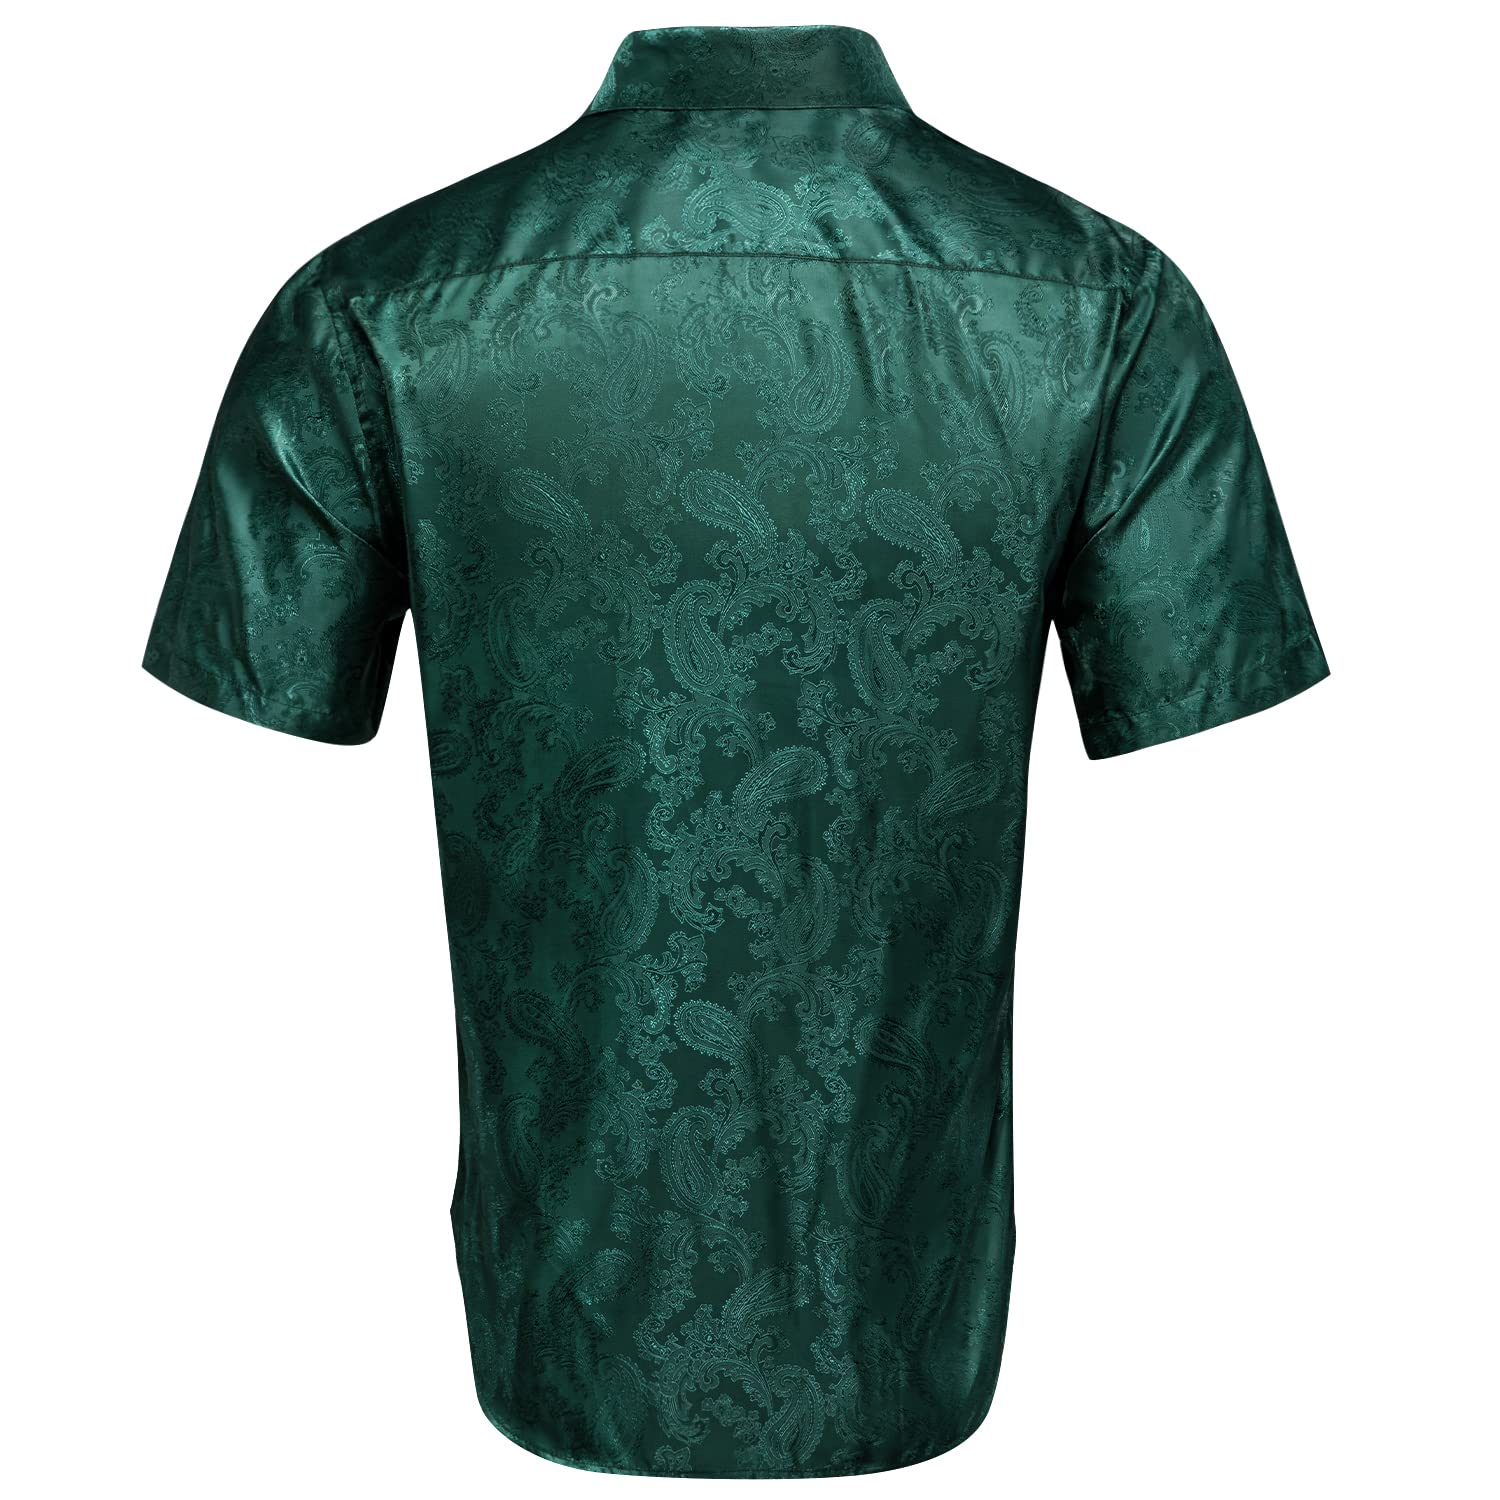 Hi-Tie Men's Dark Green Paisley Dress Shirt Solid Jacquard Silk Casual Hawaiian Button Down Shirts Short Sleeve Shirt